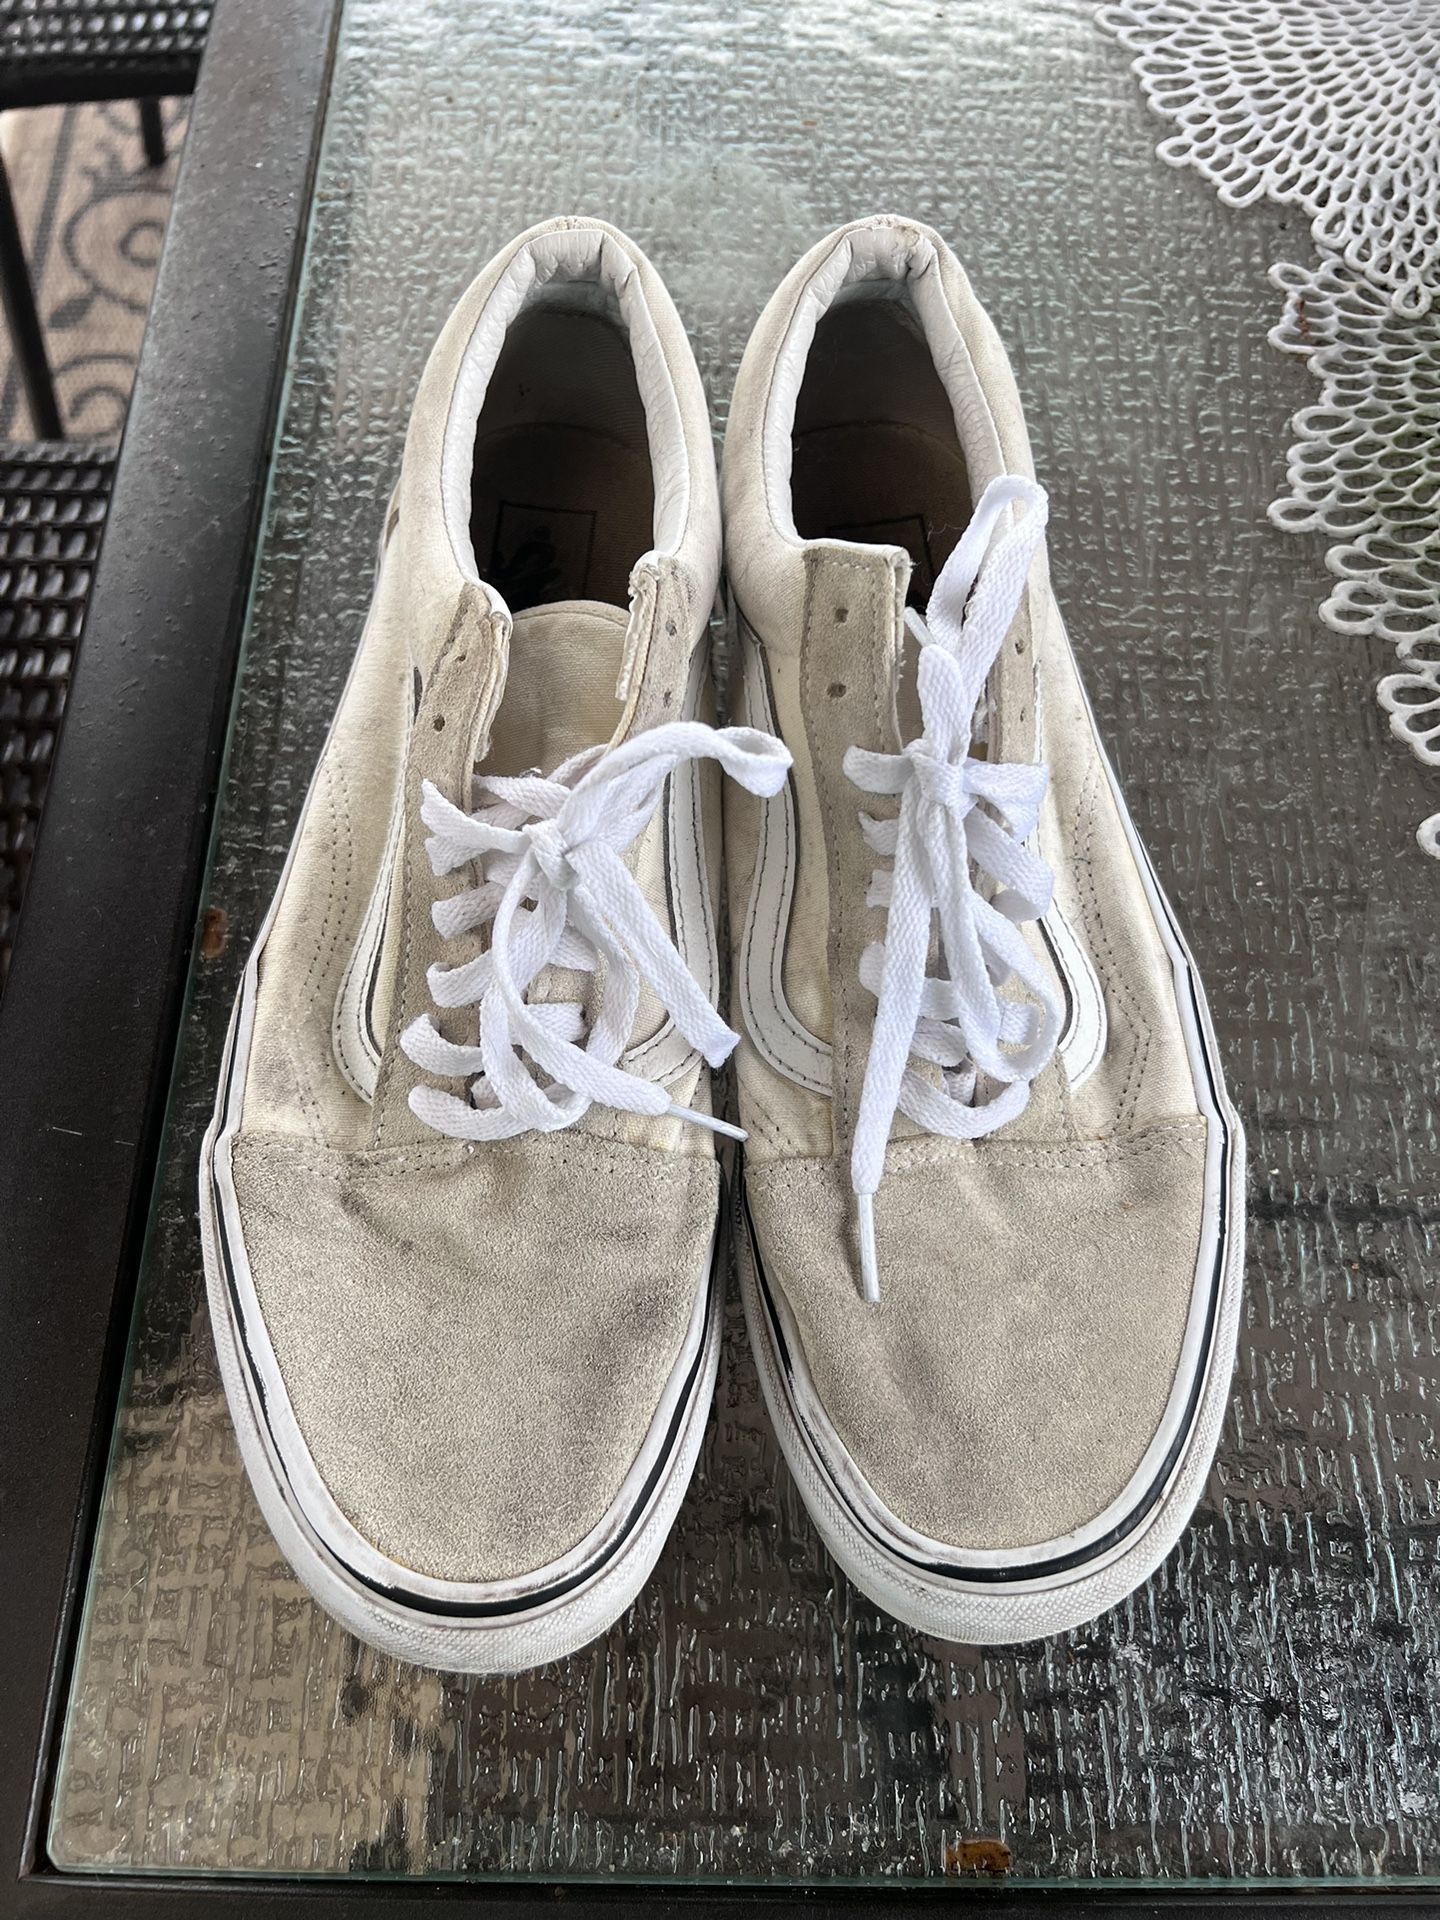 Vans / Skate Shoes - Size 11